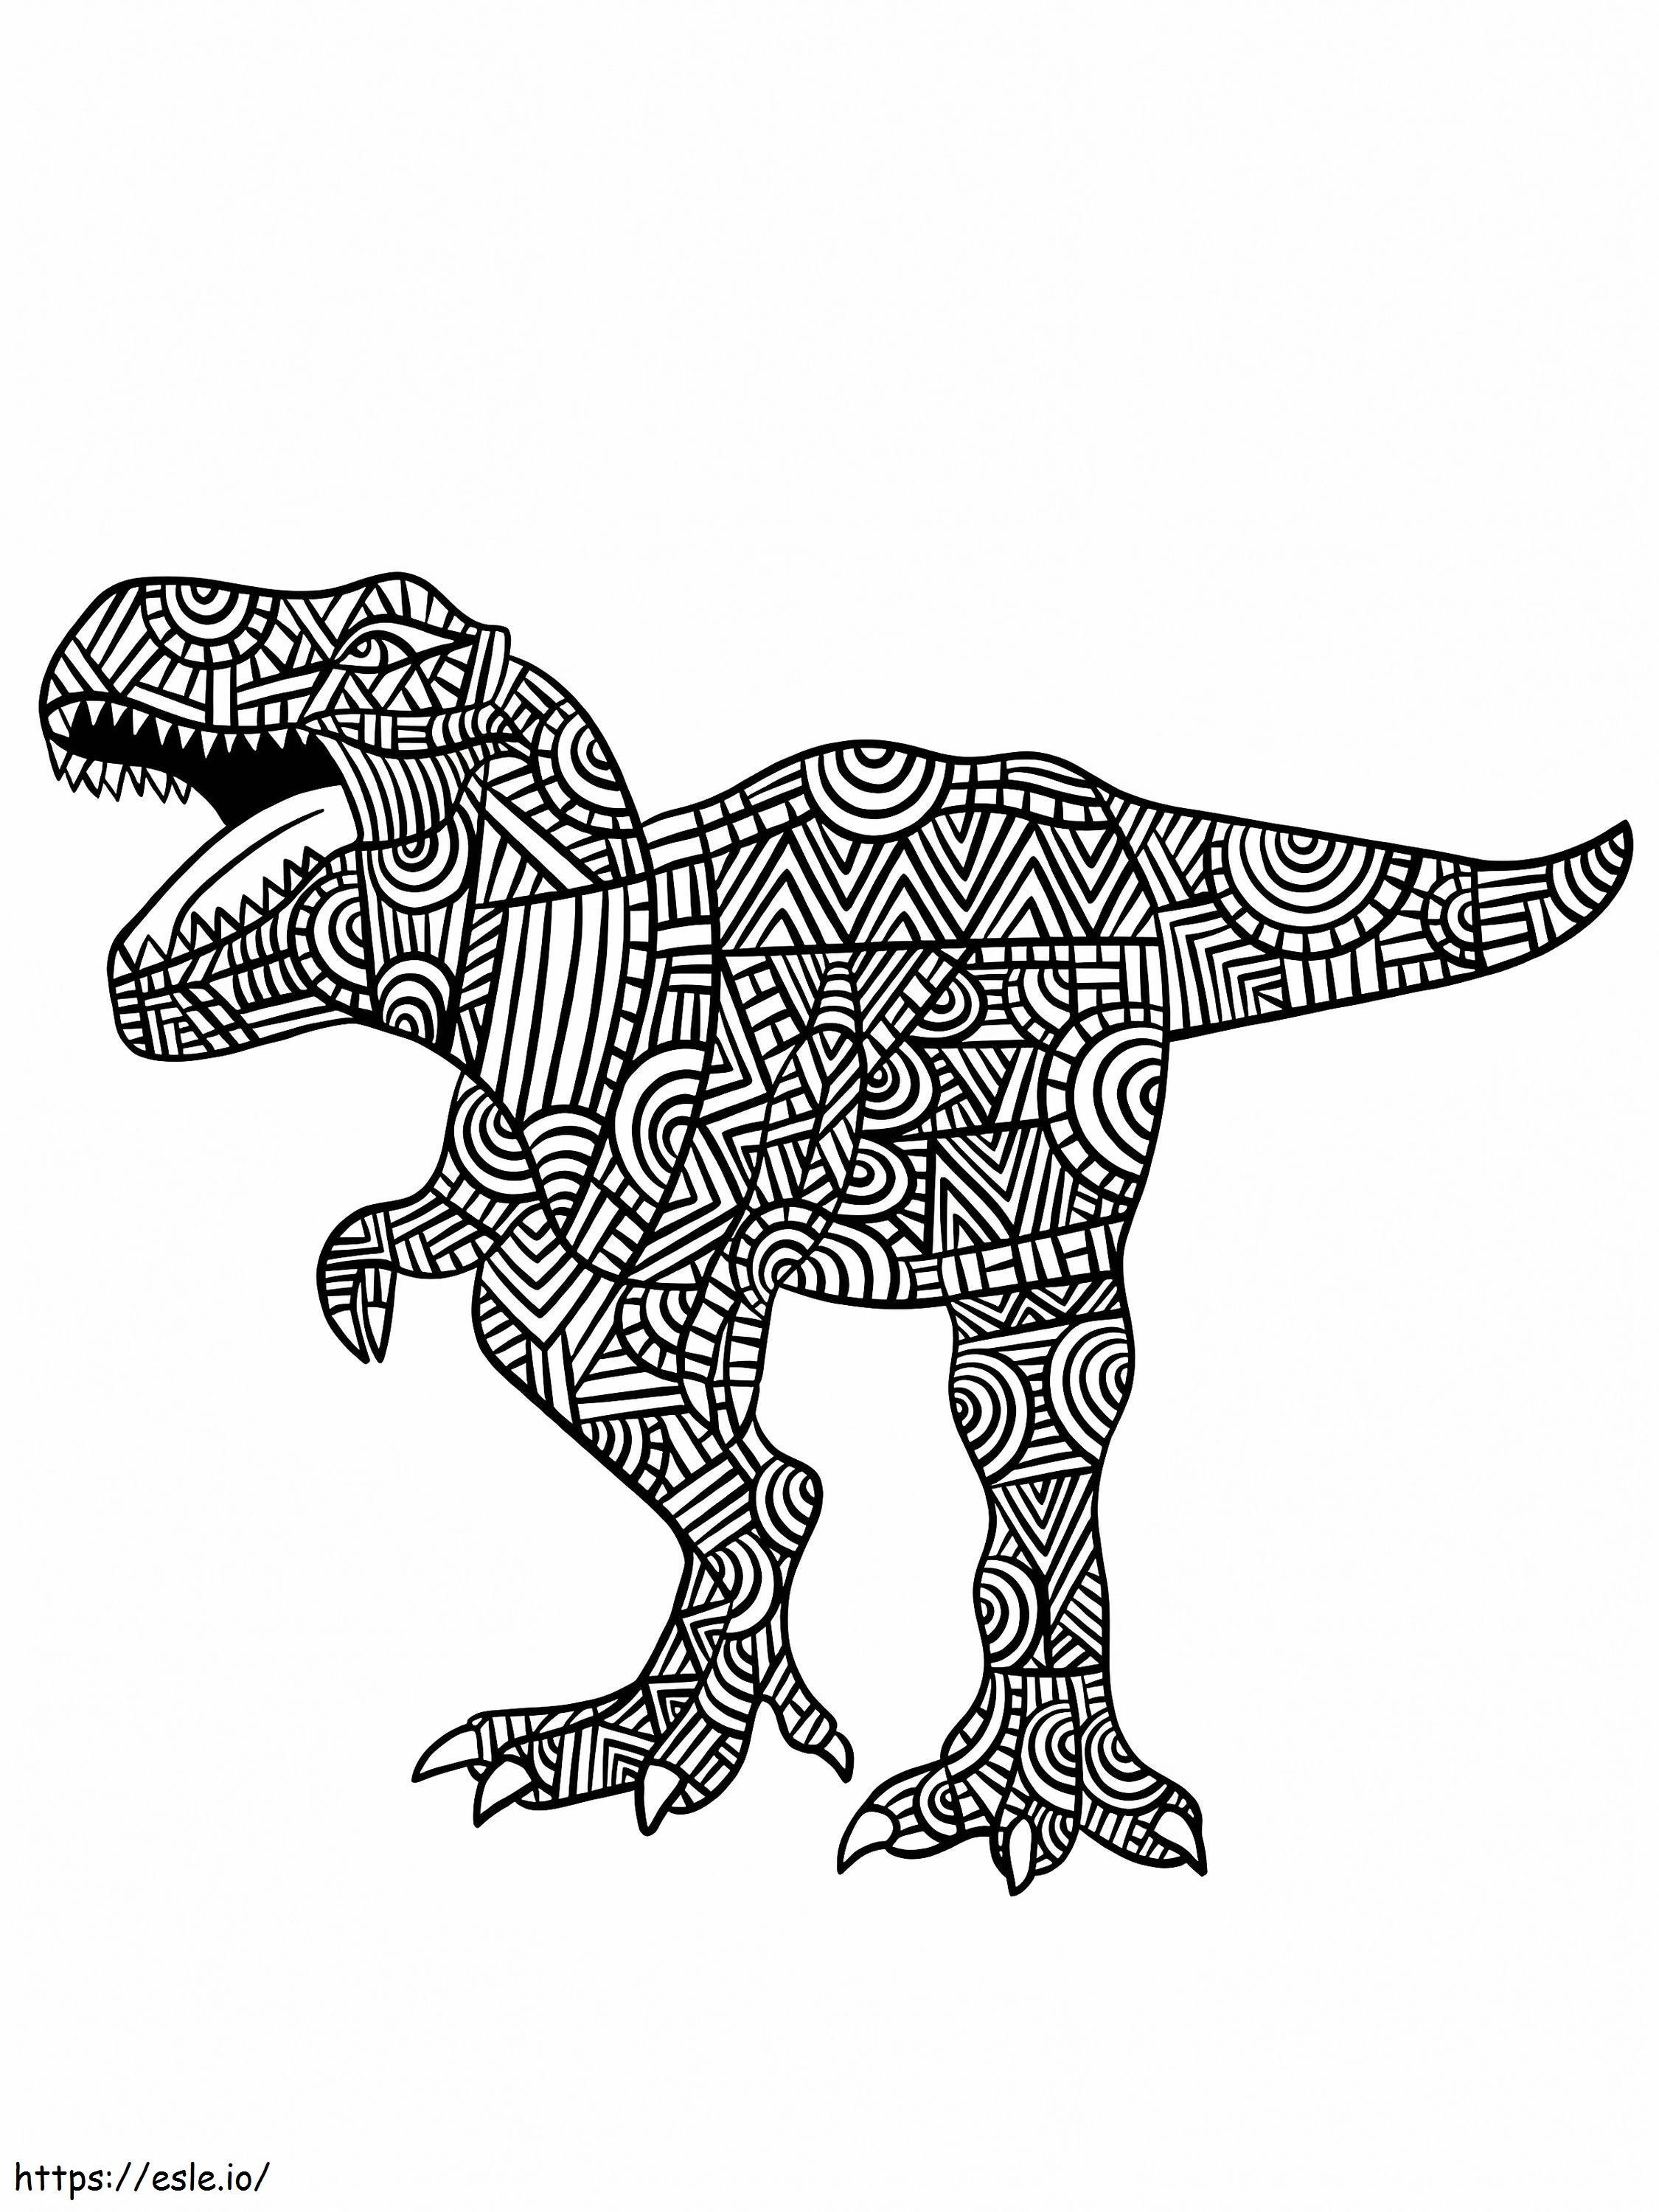 Tyrannosaurus Rex Dinosaur Alebrijes coloring page